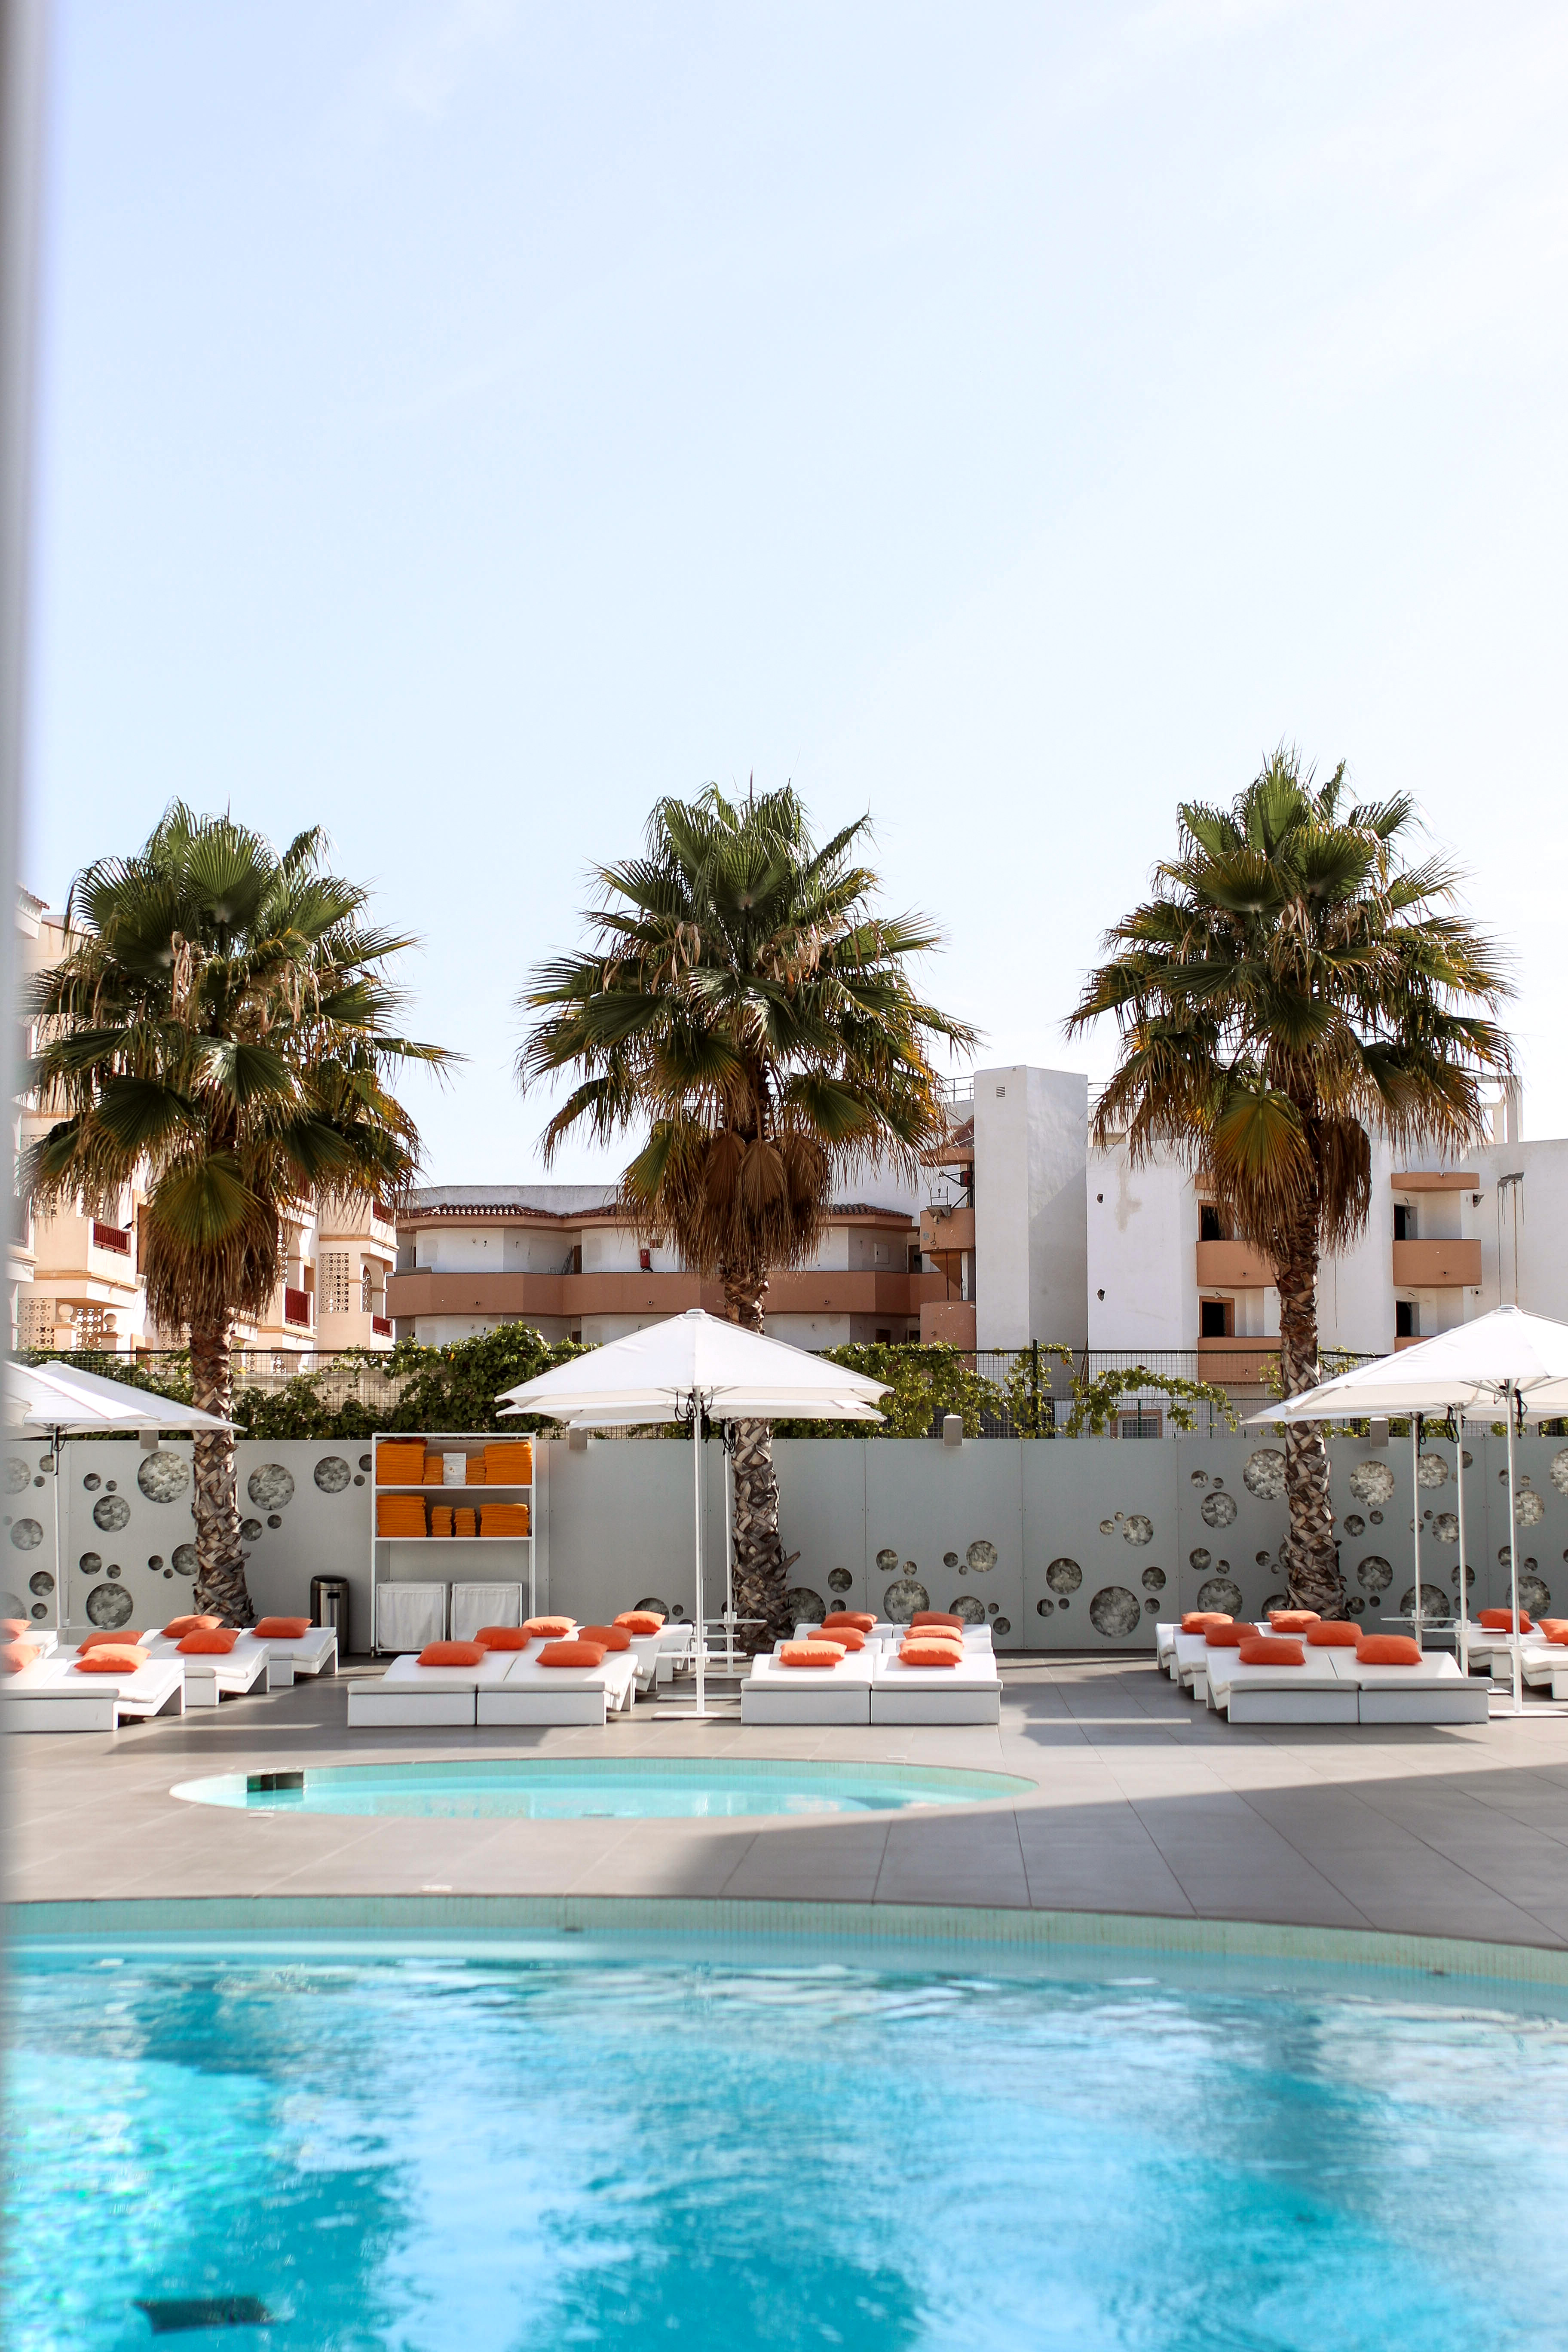 ibiza sun hotel bewertung ibiza sun apartments empfehlung erfahrung playa den bossa